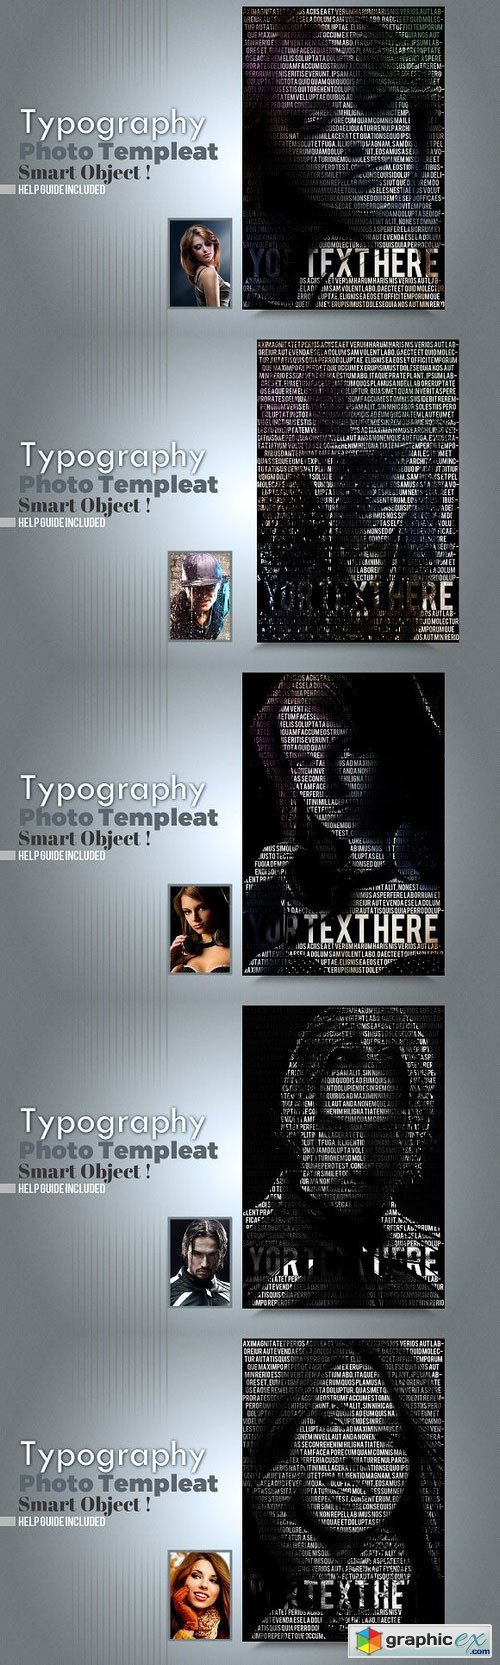 Typography Photo Templeate